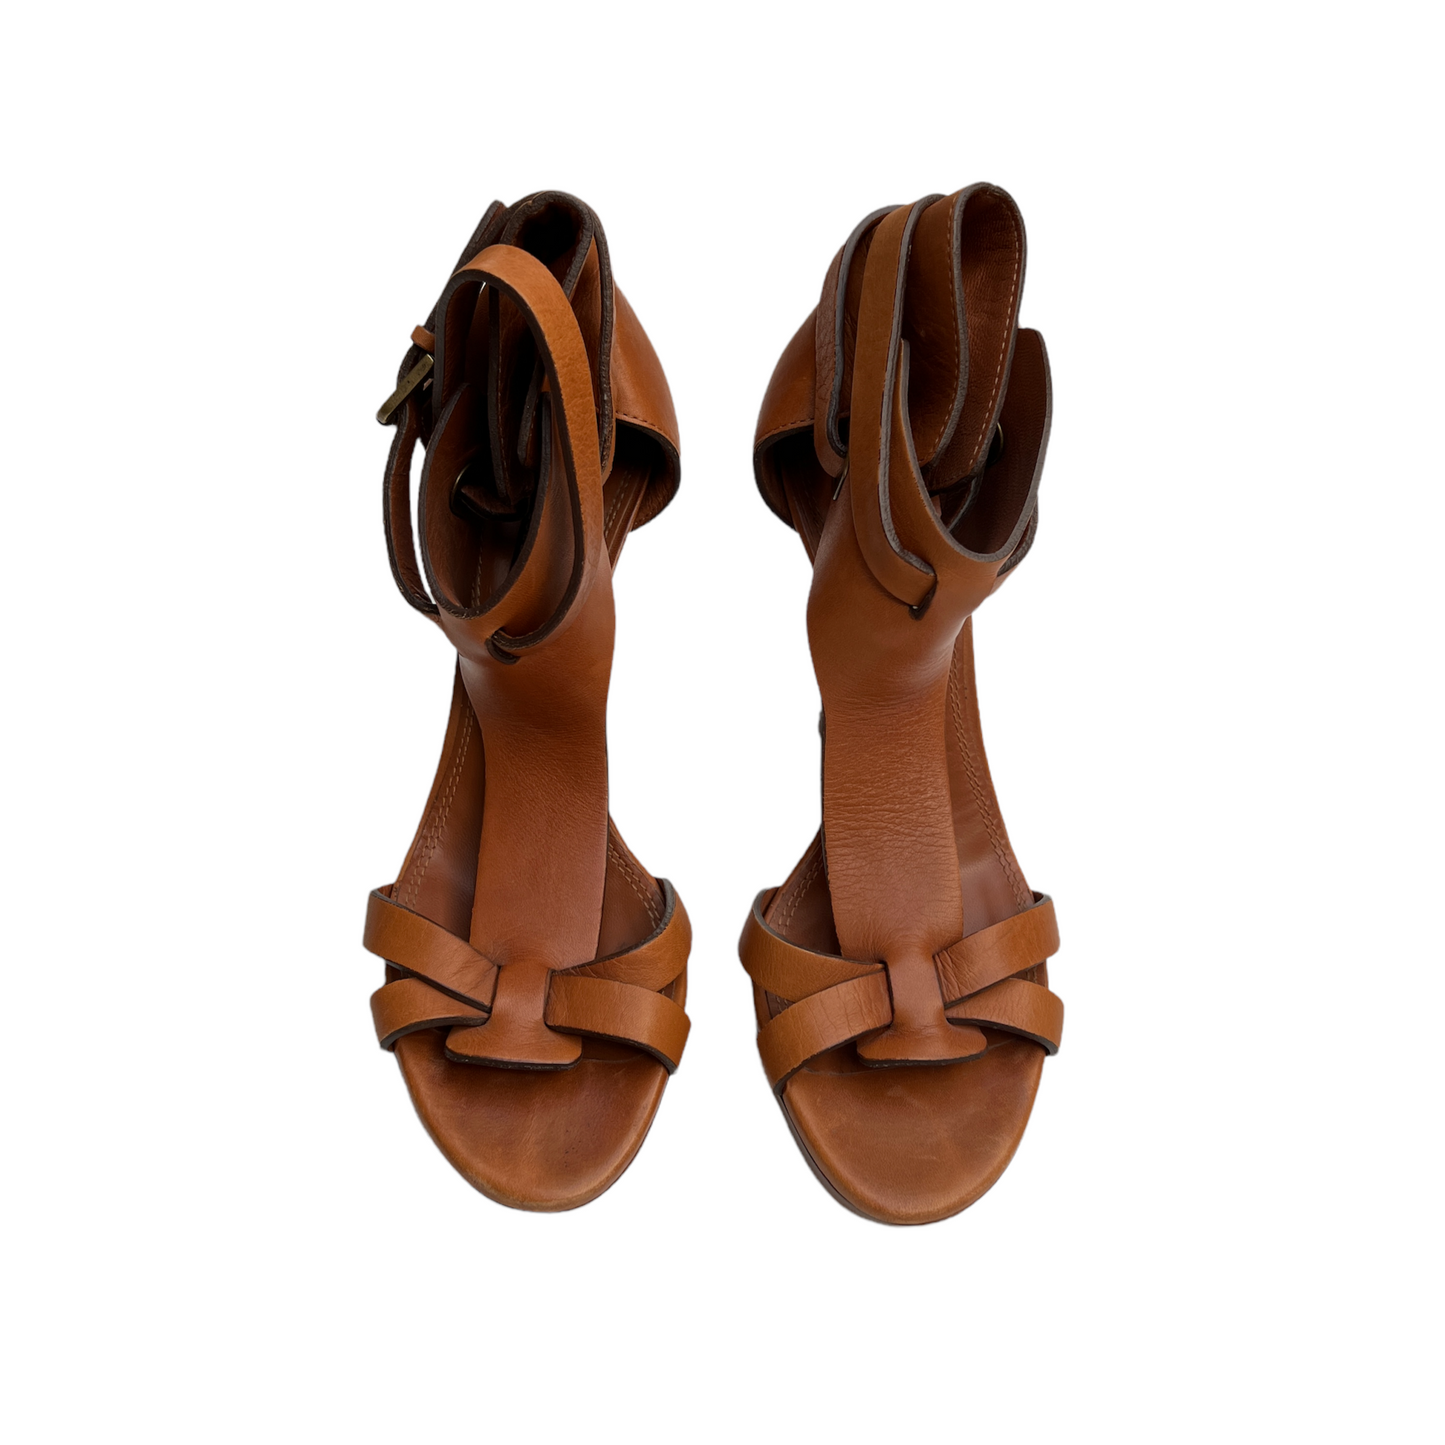 Tan Heeled Sandals - 6.5